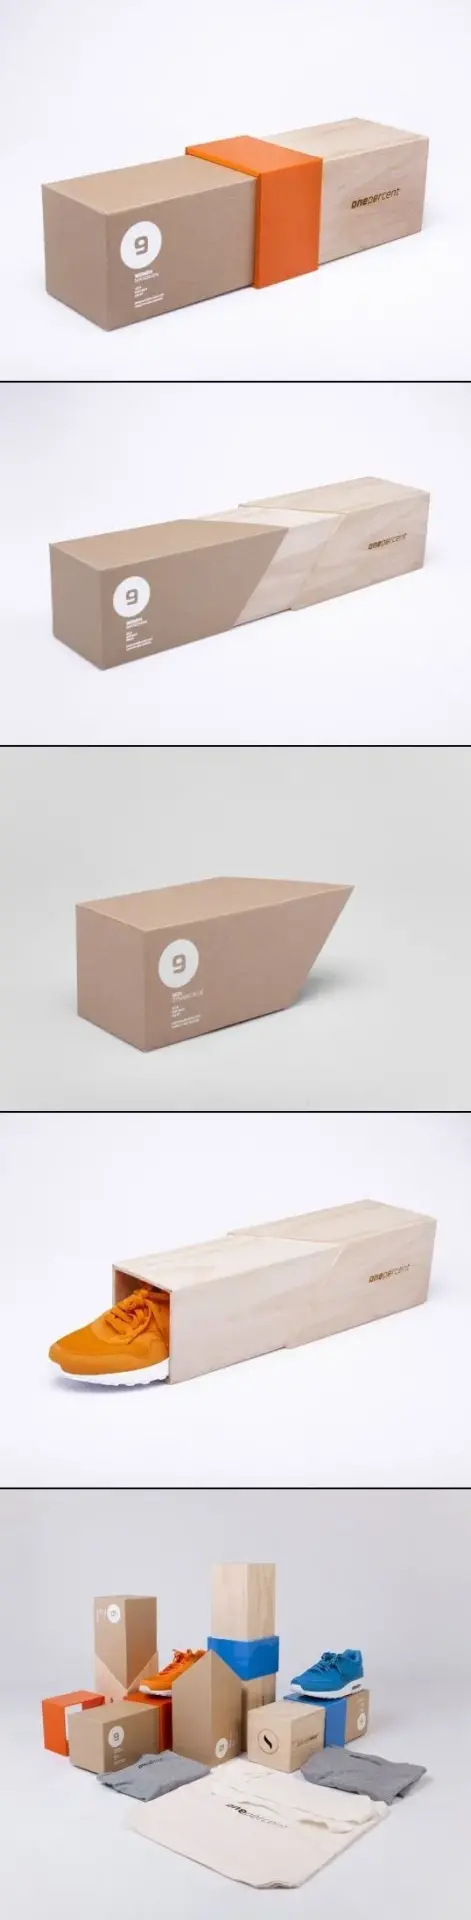 Packaging design6